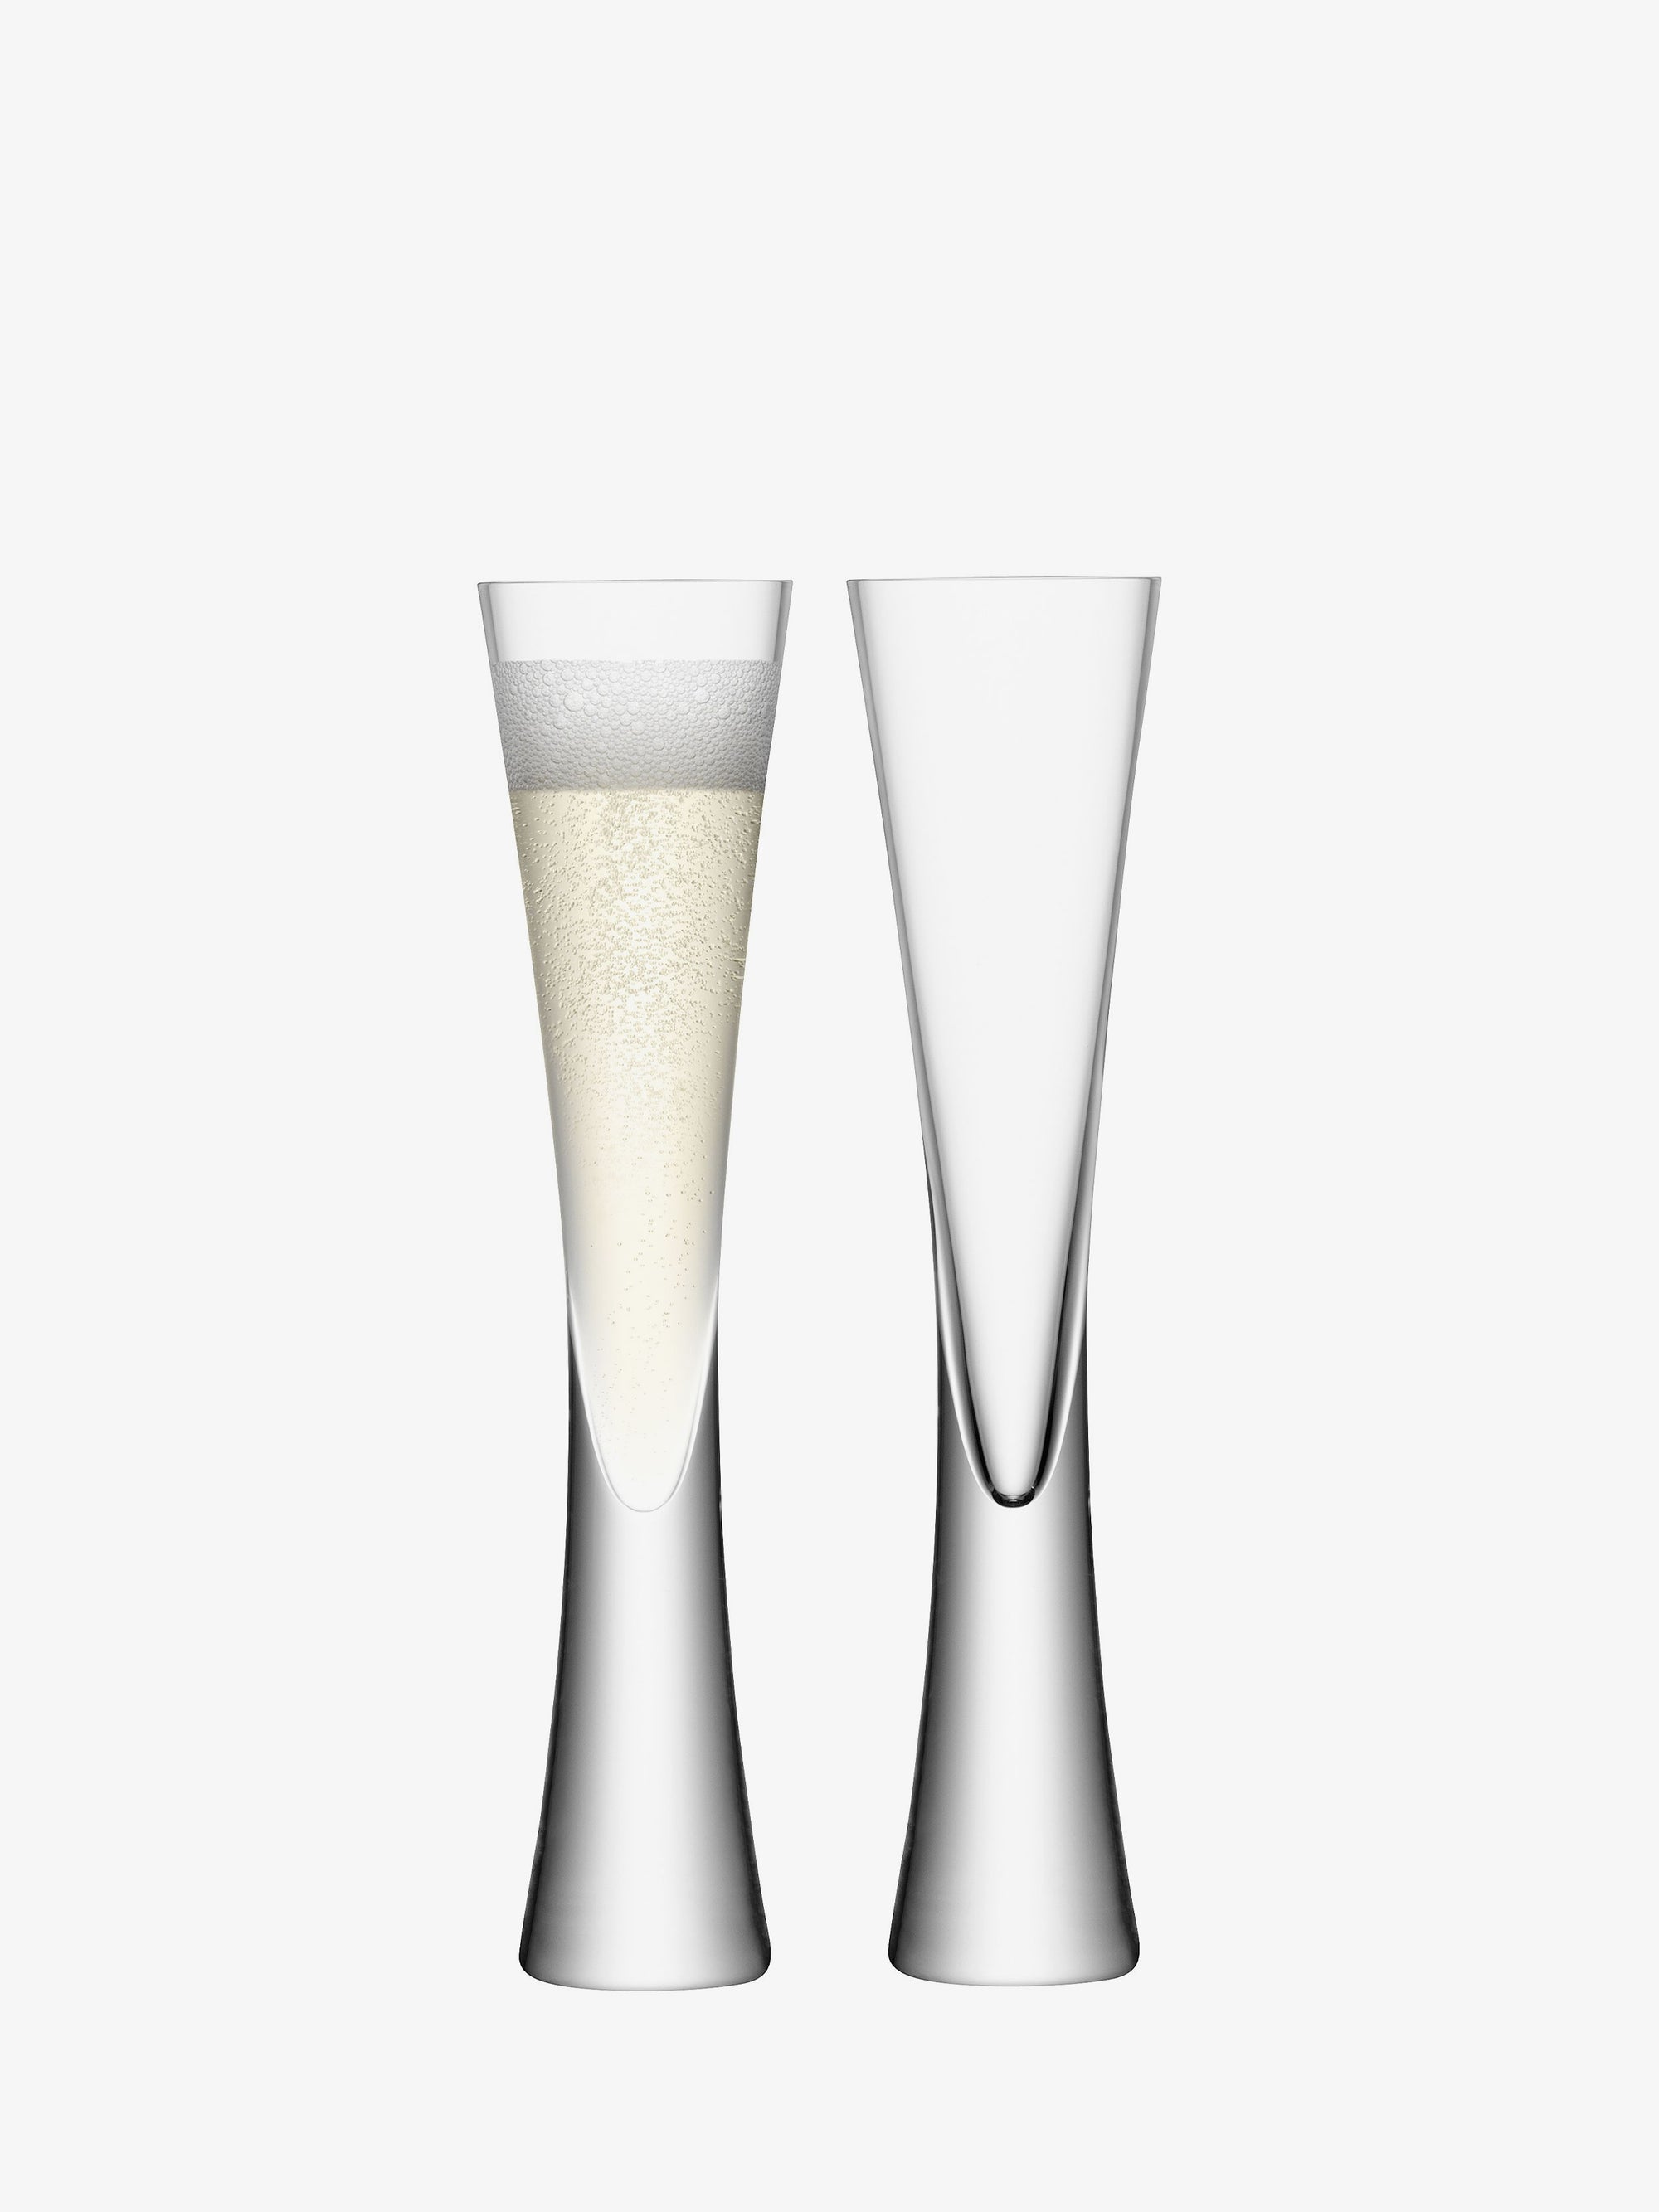 Moya Handblown Champagne Flutes, Set of 2